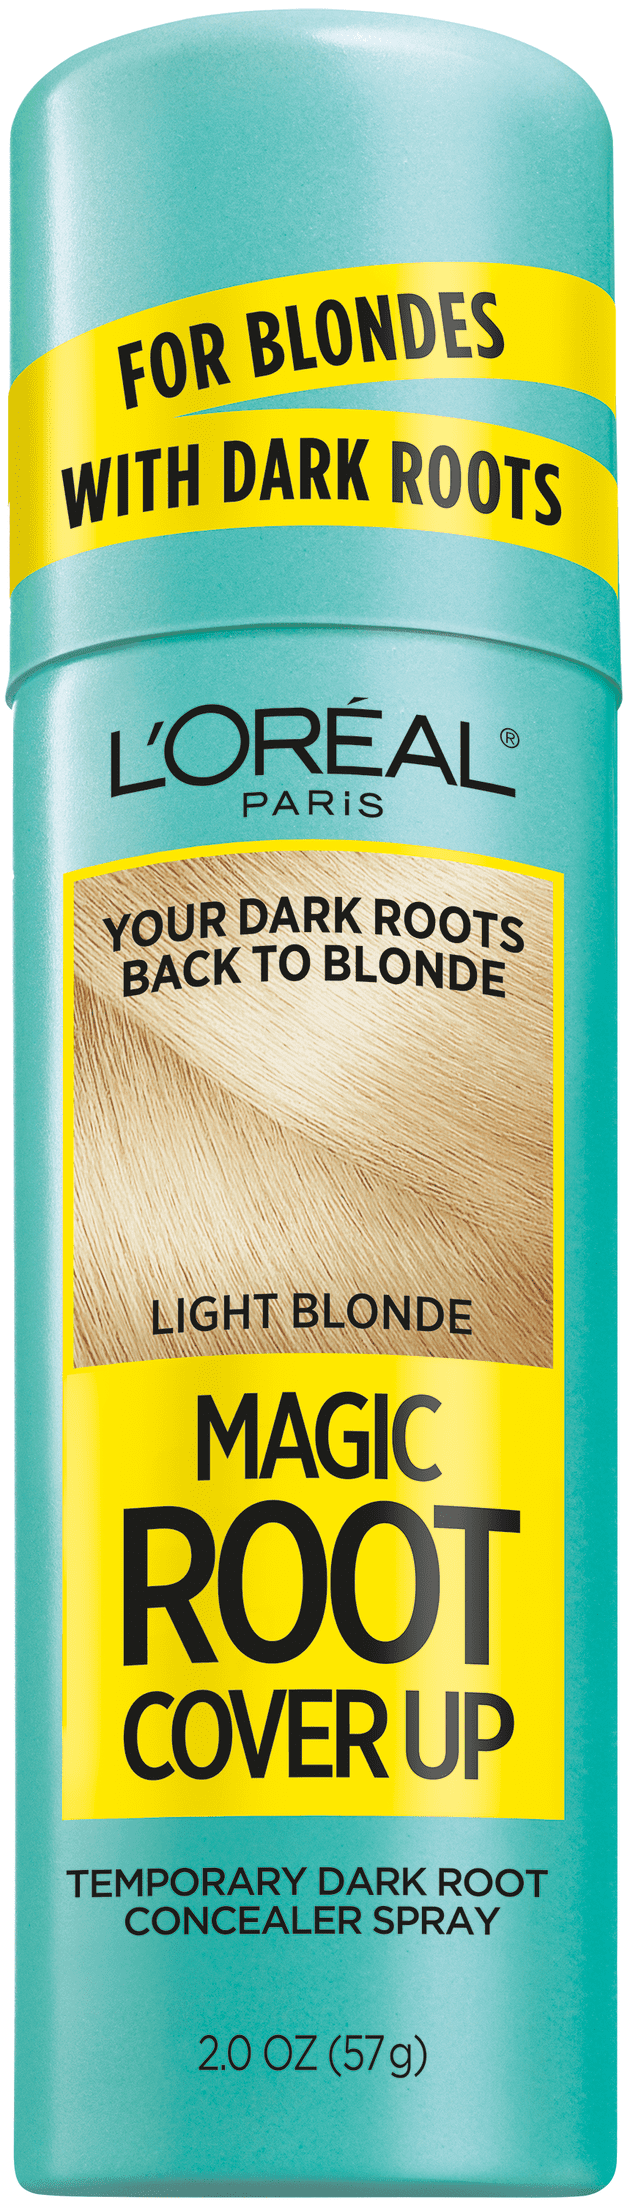 L'Oreal Paris Magic Root Cover Up Concealer Spray, 01 Light Blonde, oz 